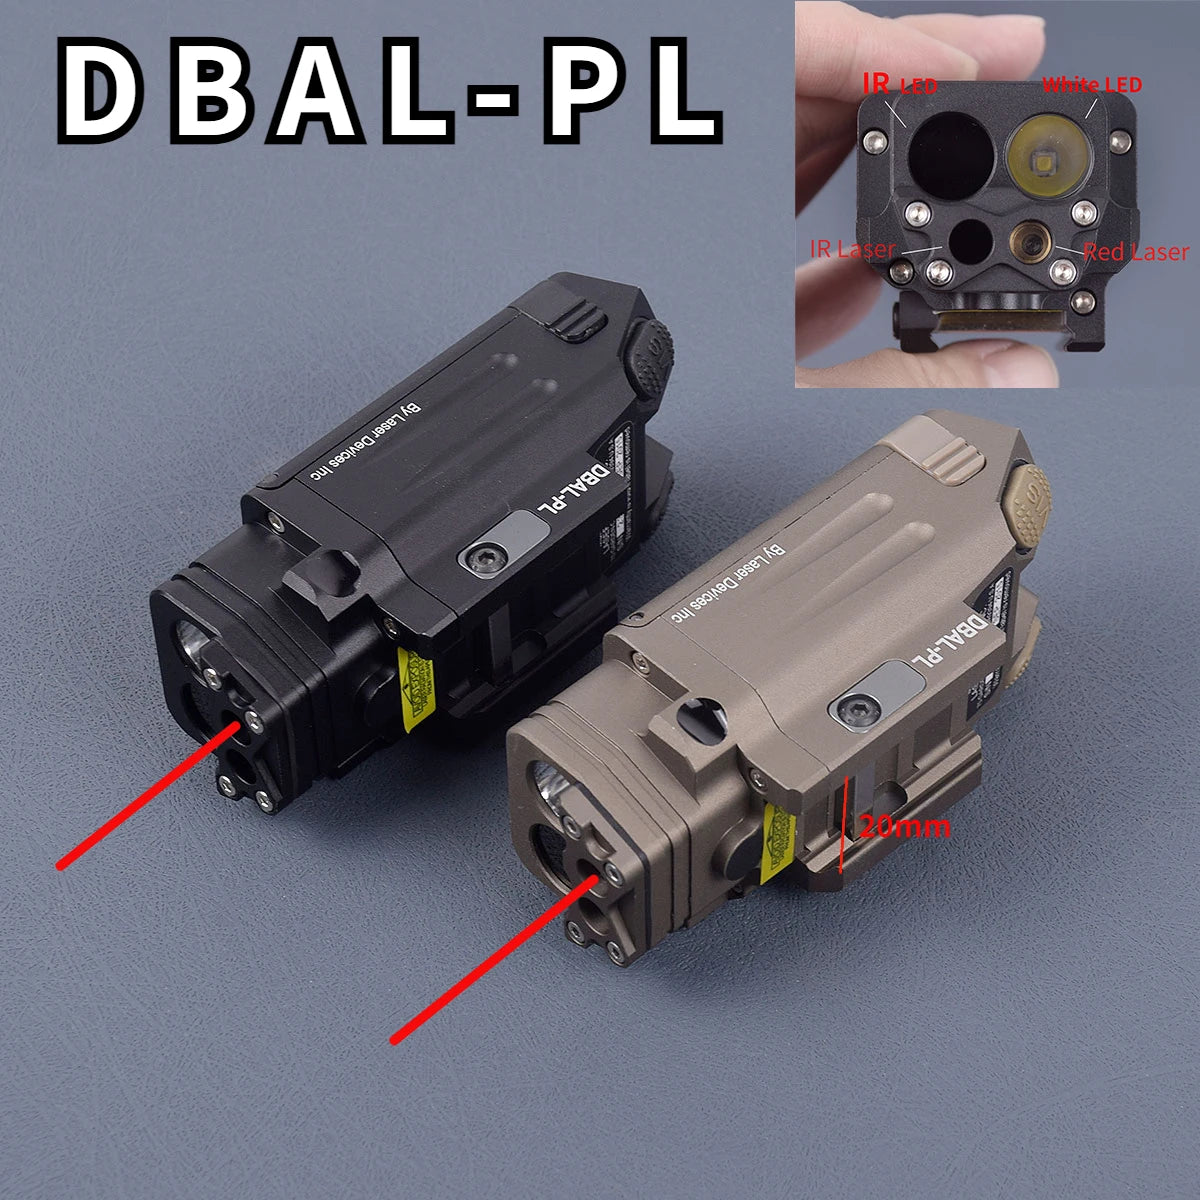 Tactical DBAL DBAL-PL IR Laser Light Combo Strobe Weapon Light LED Gun Flashlight With Red Laser NV Illuminator For 20mm Rail